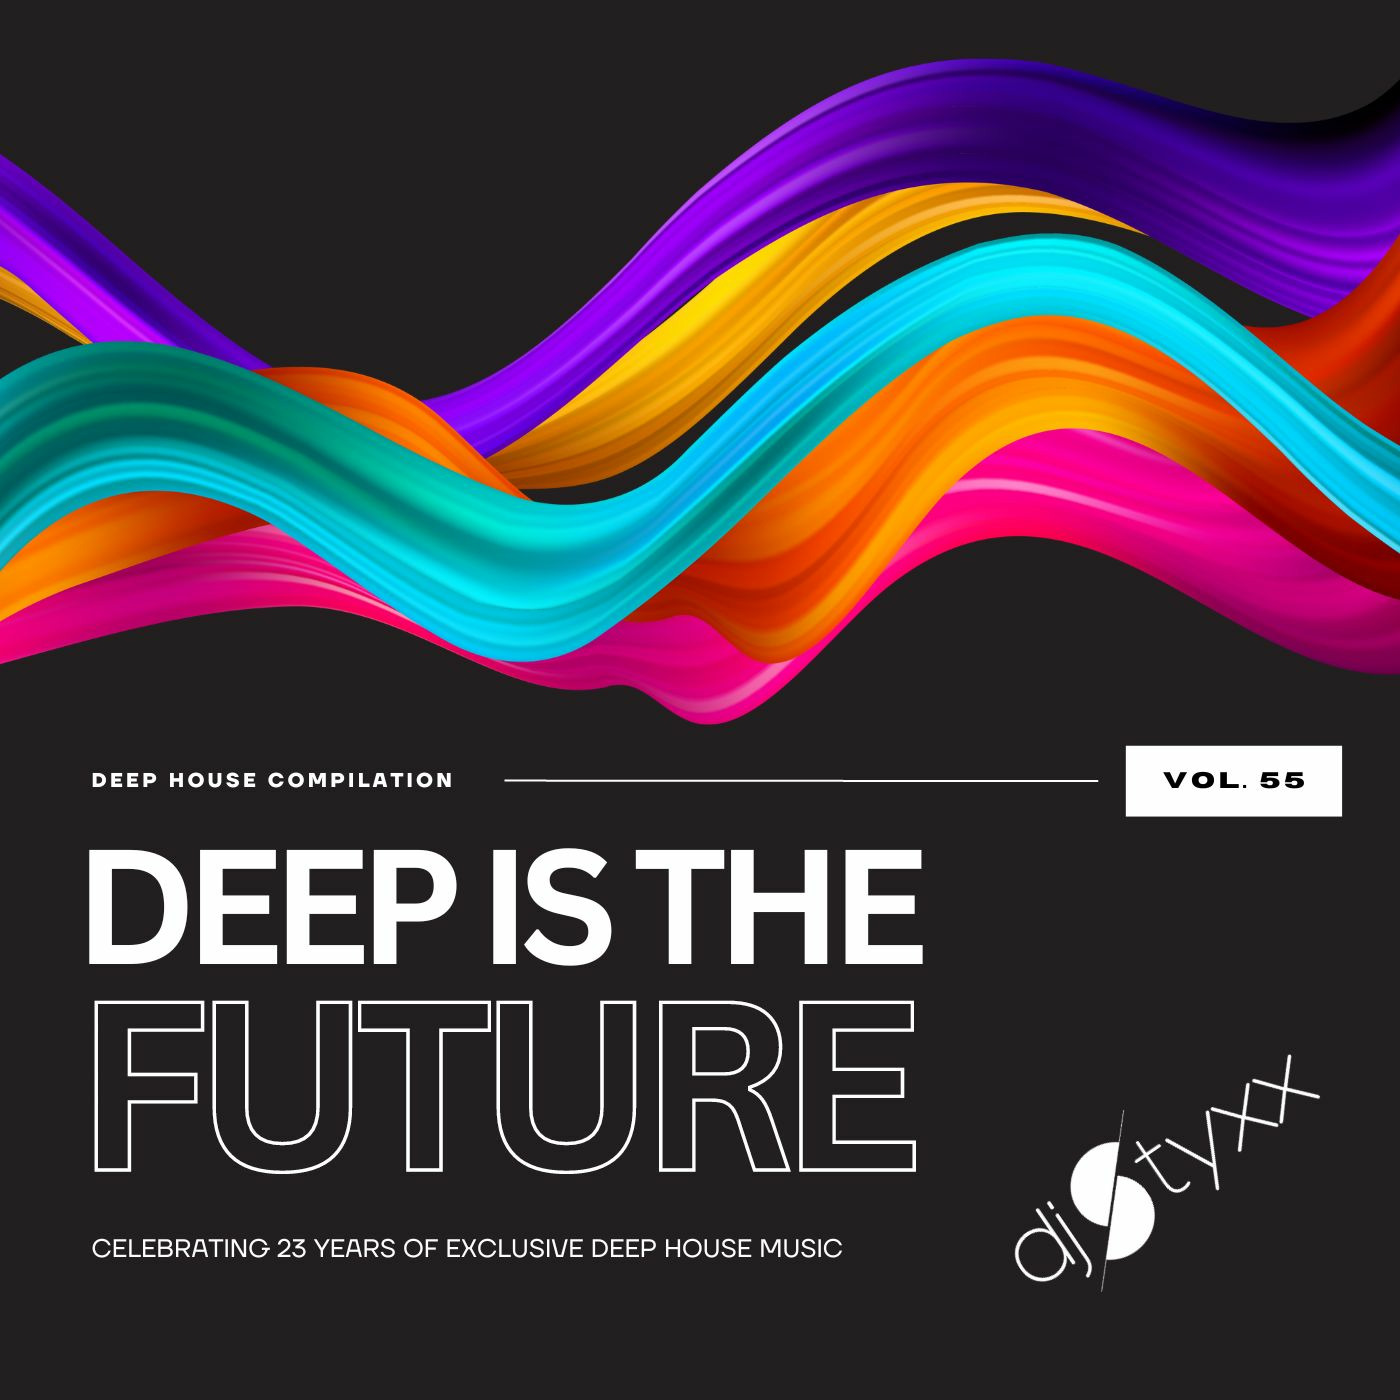 Styxx - Deep is the Future (Vol.55)